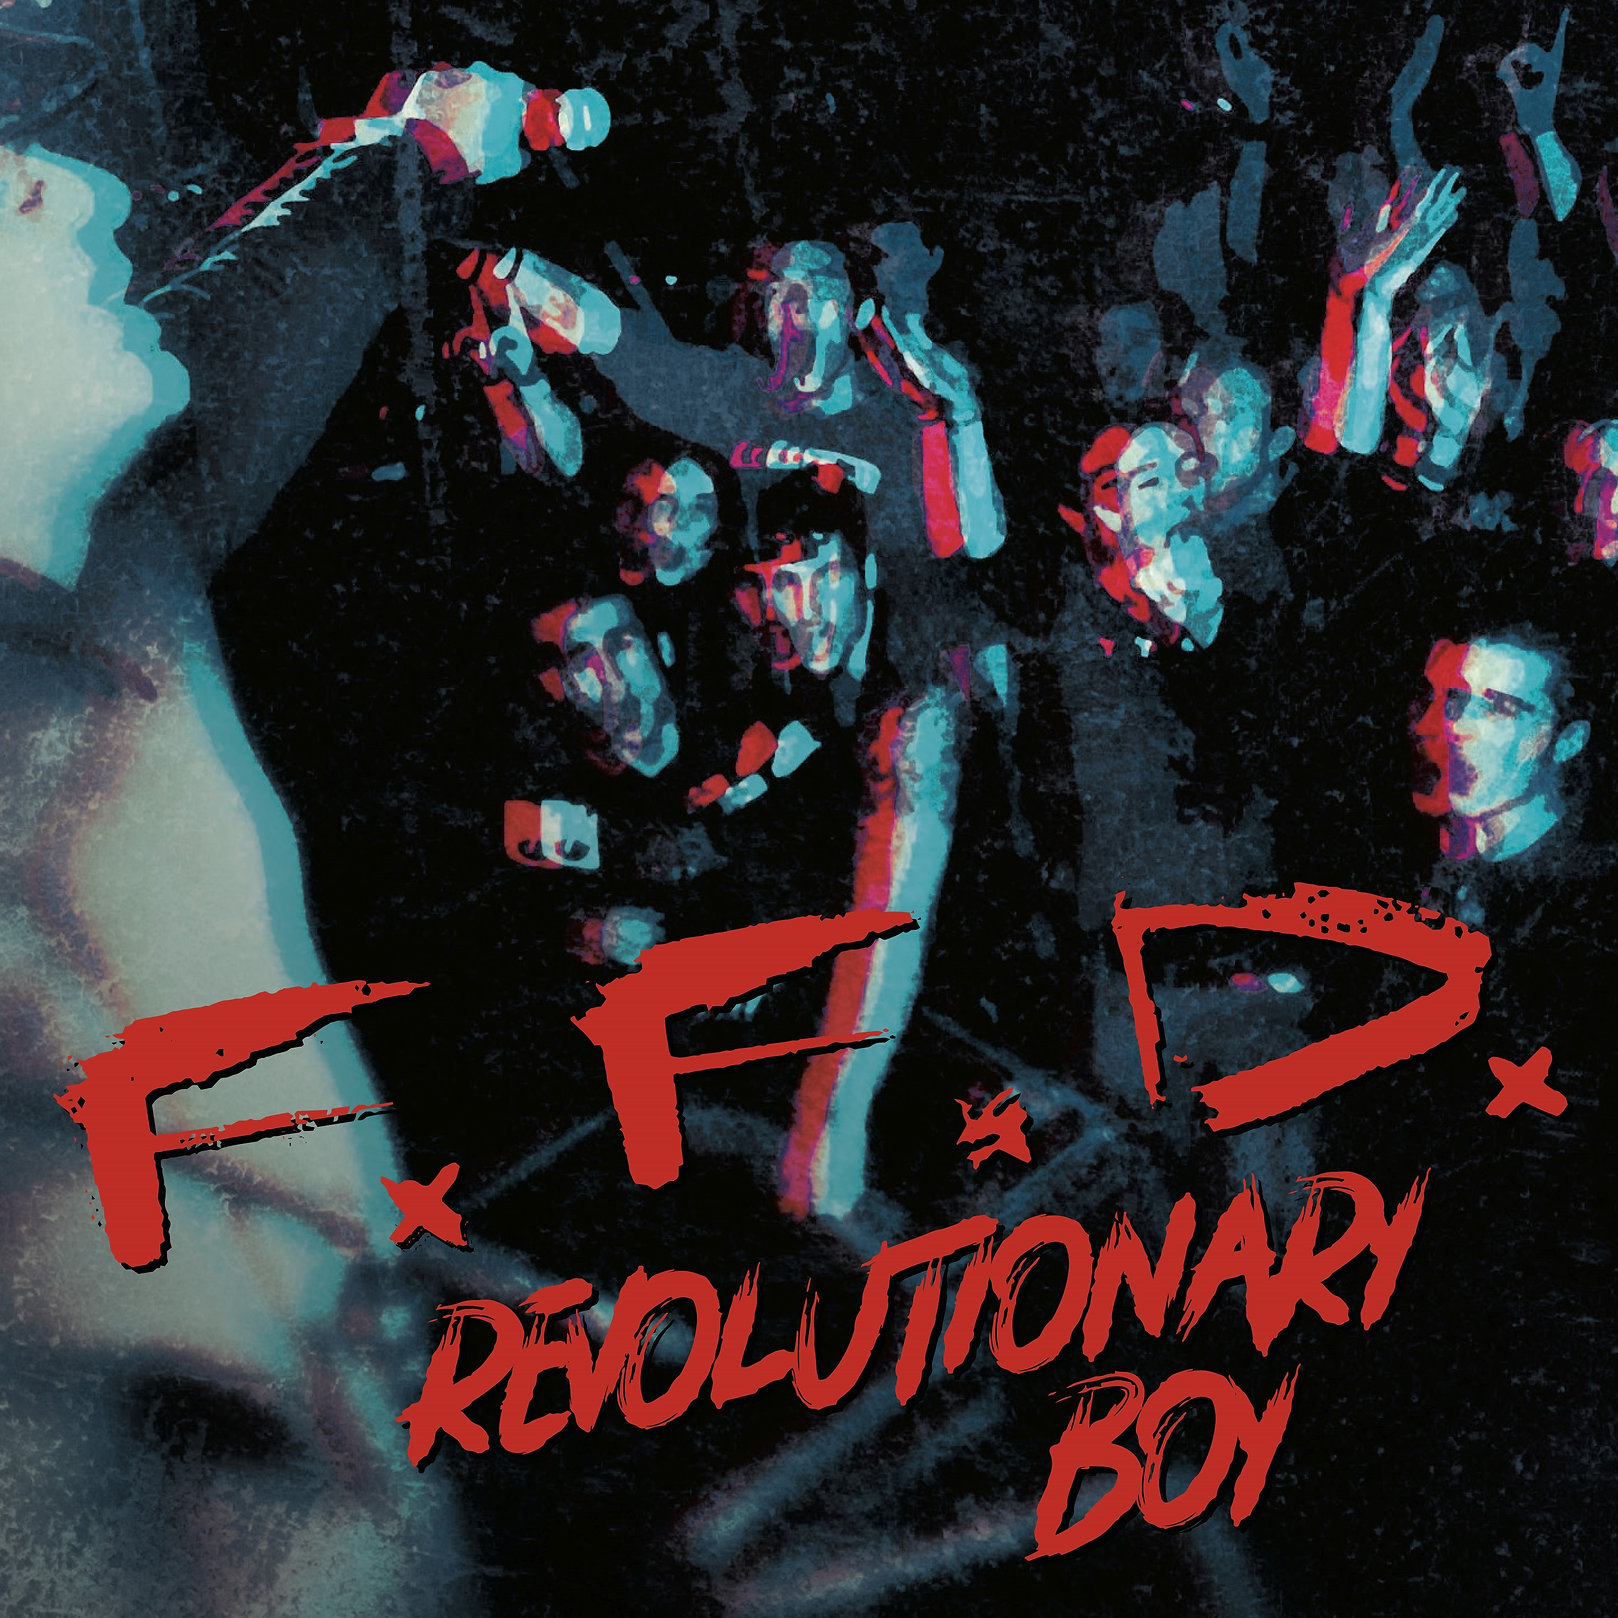 FFD - Revolutionary Boy